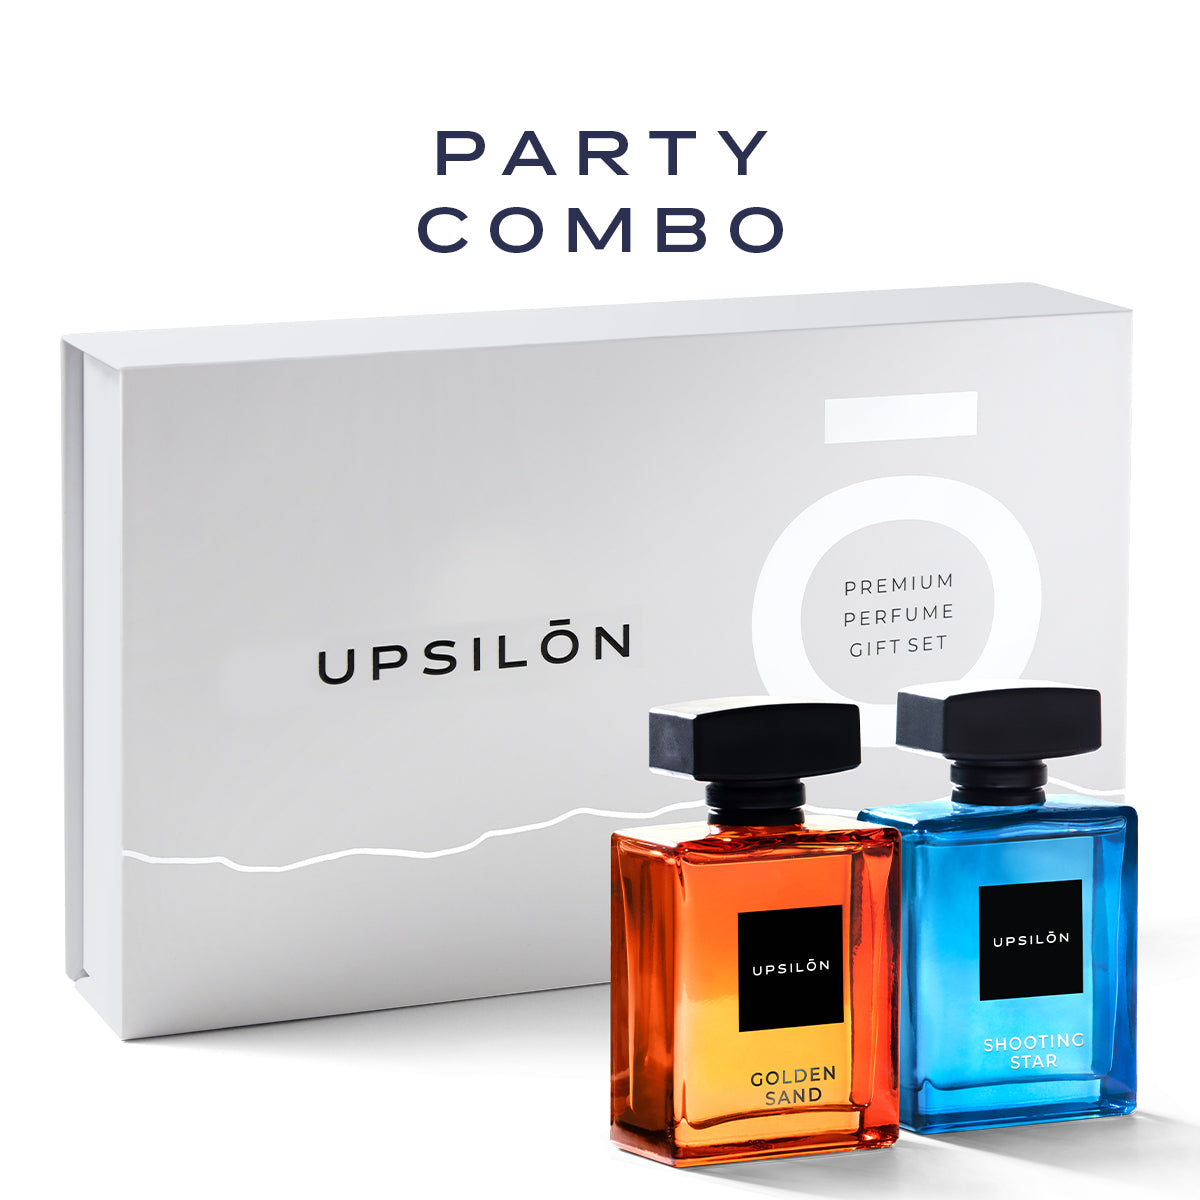 Two Upsilon Eau de Parfum bottles, Golden Sand and Shooting Star, in a white gift box